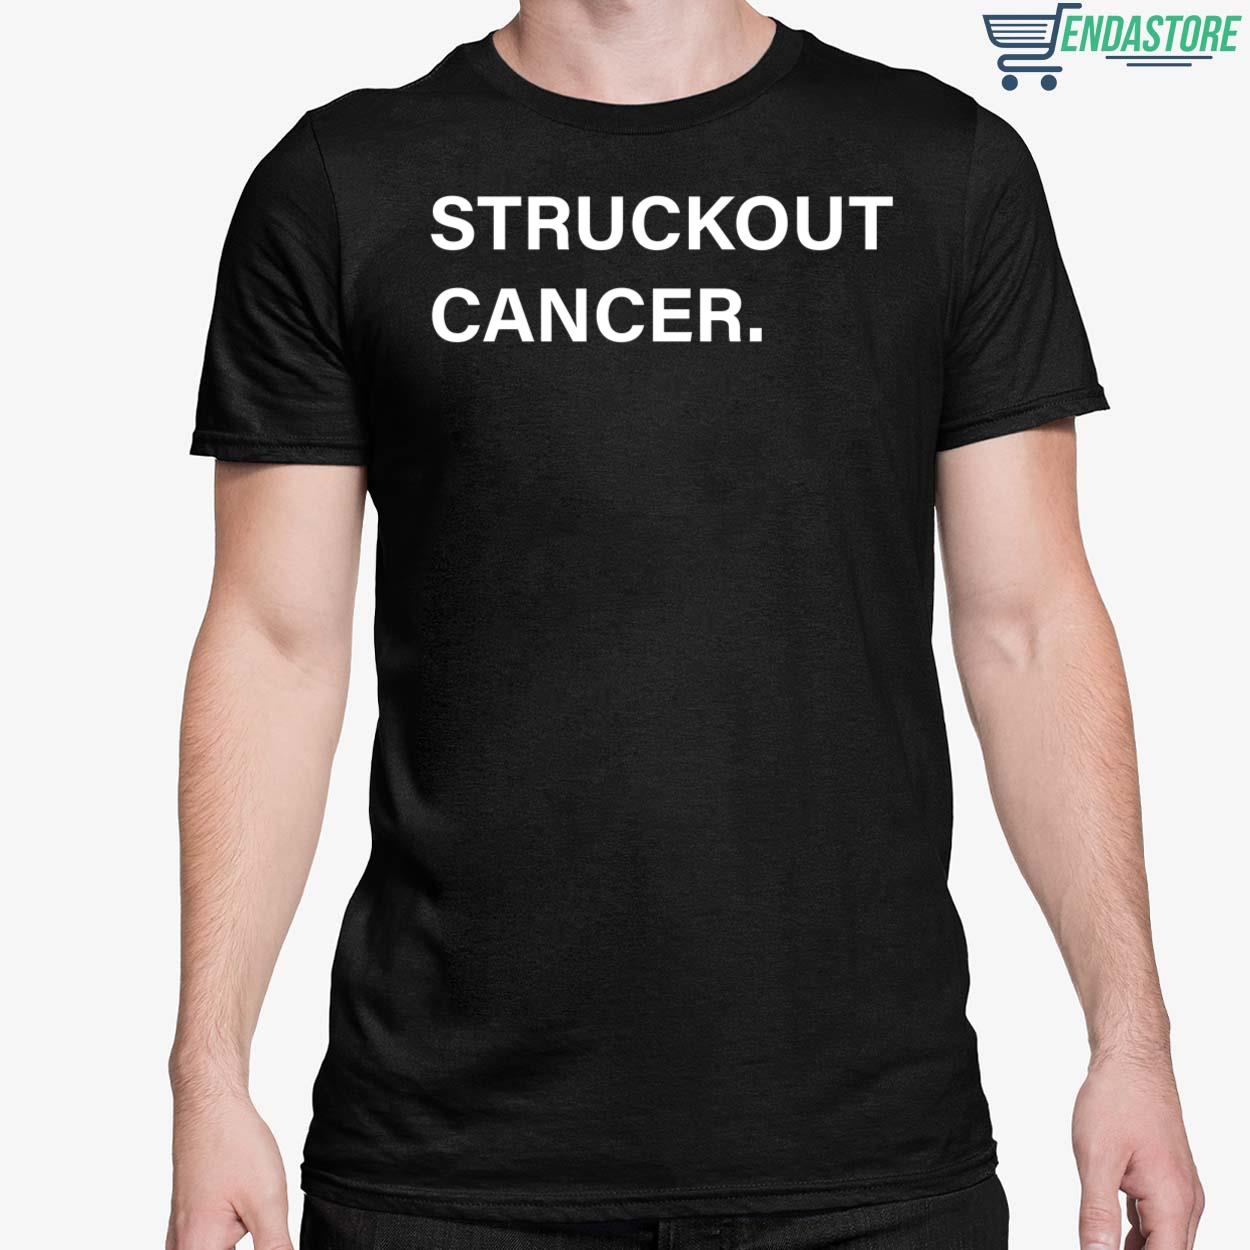 Endastore Liam Hendriks Struckout Cancer Shirt